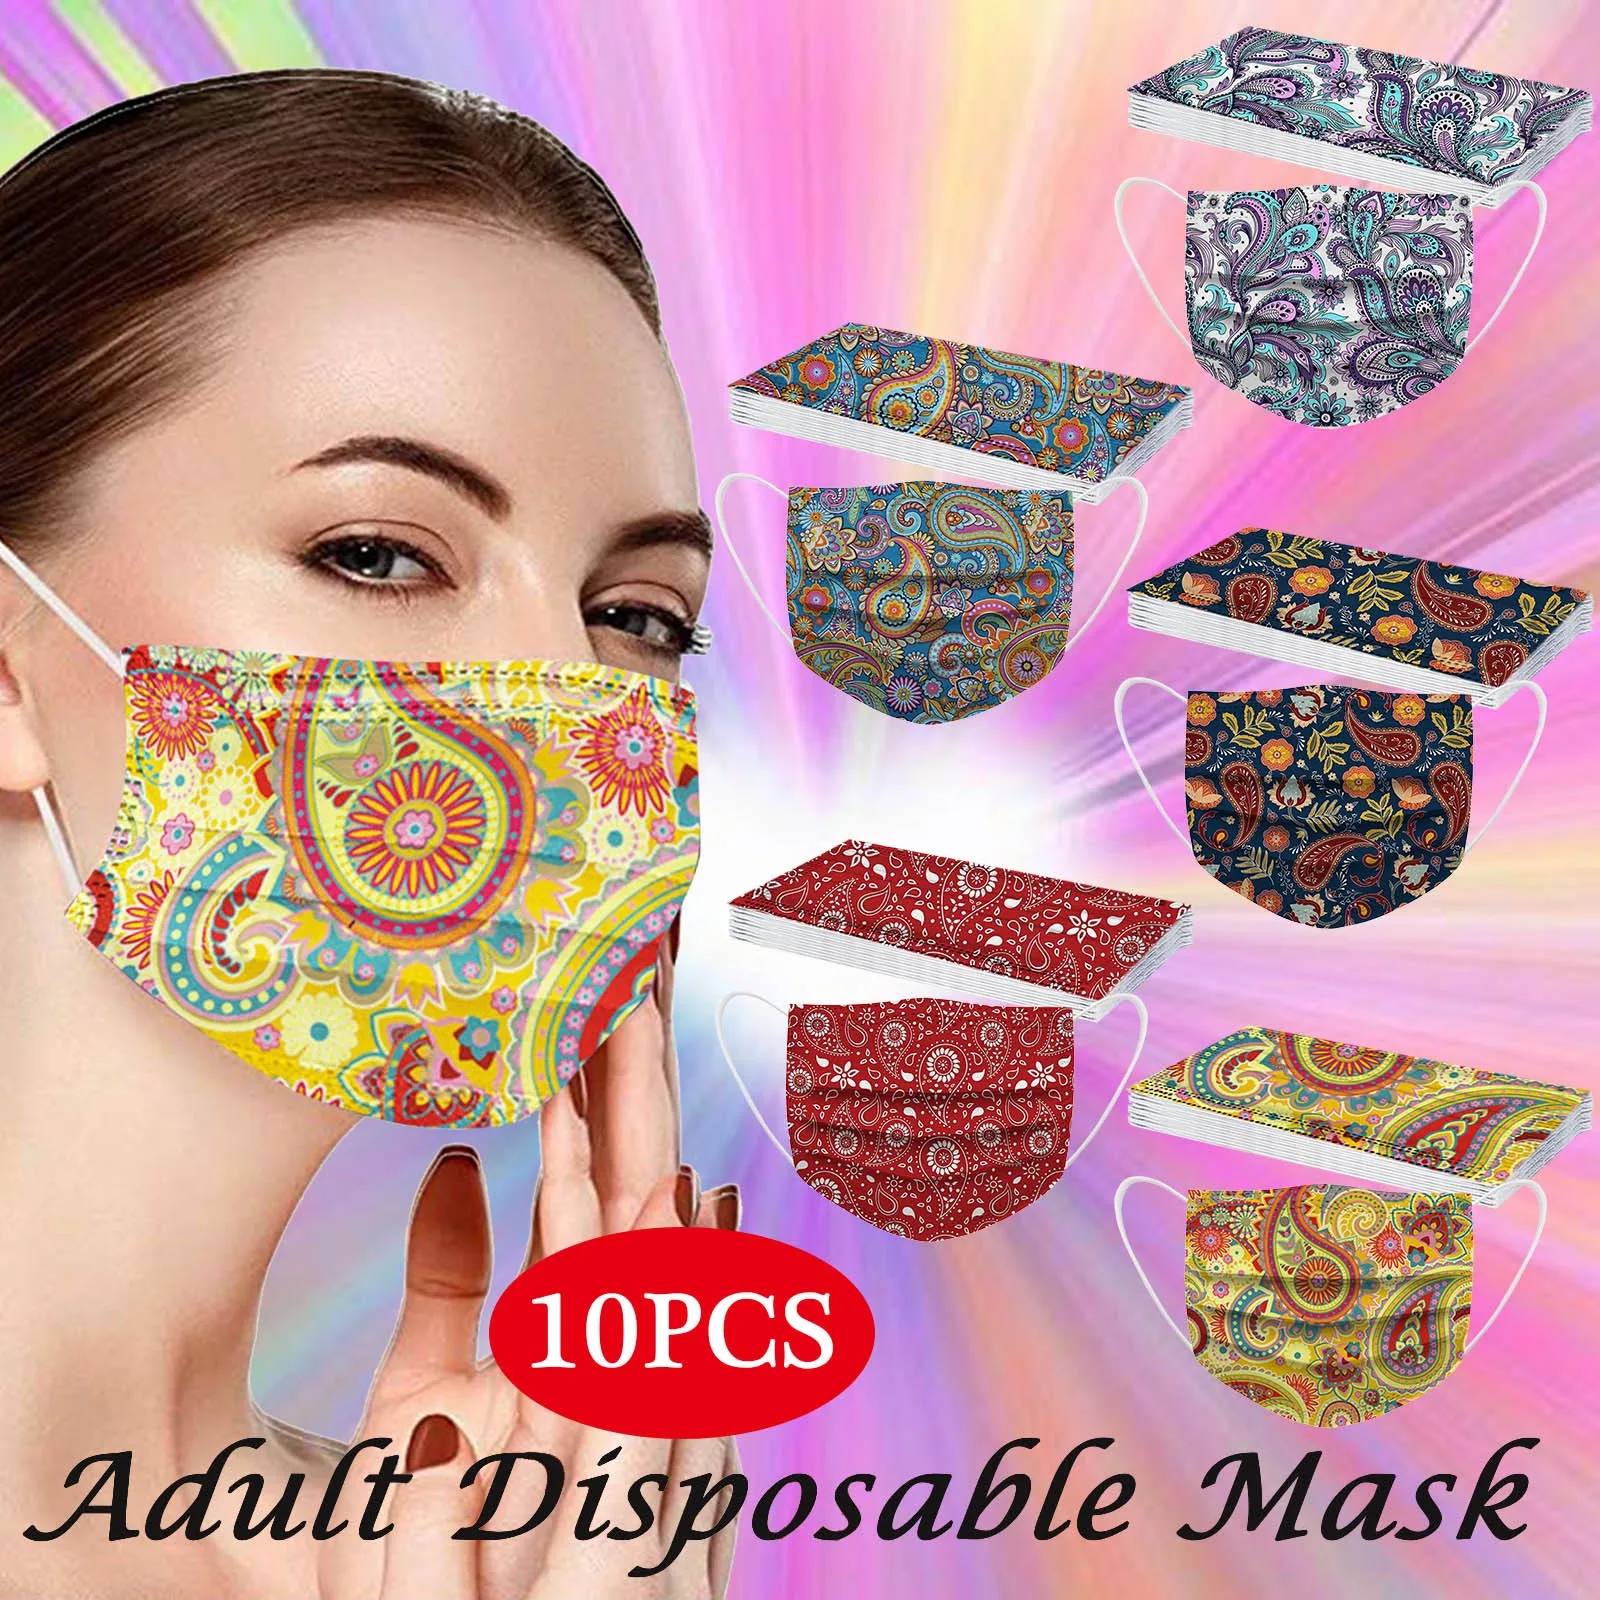 

10pcs Adult's Masks Paisley Print Disposable Face Mask Industrial 3ply Filter Pm2.5 Mask Earloop Bandage Masques Маска Для Лица